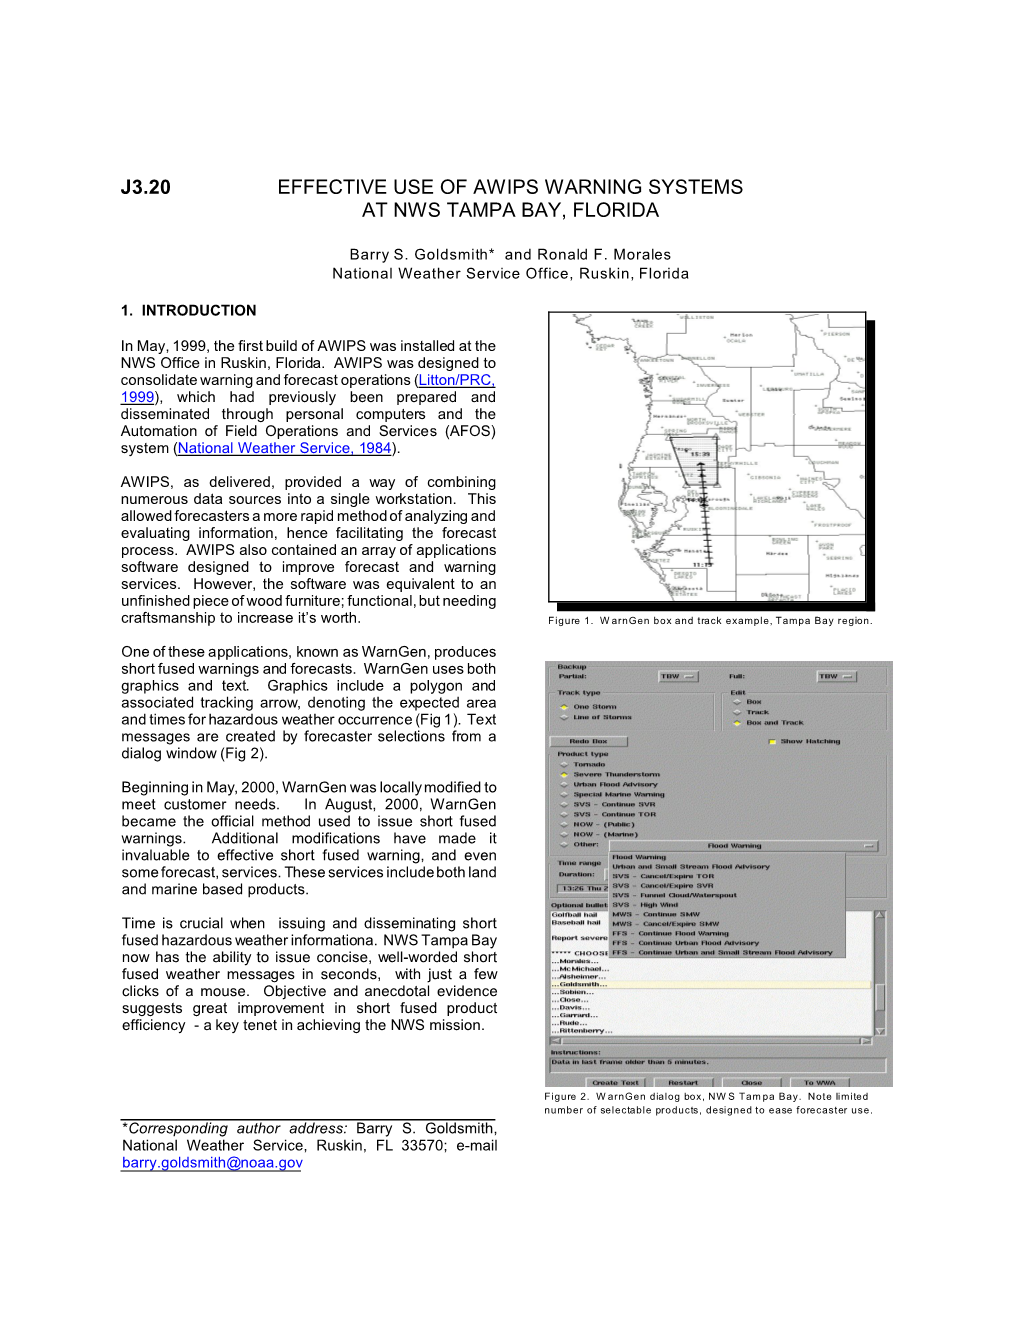 J3.20 Effective Use of Awips Warning Systems at Nws Tampa Bay, Florida